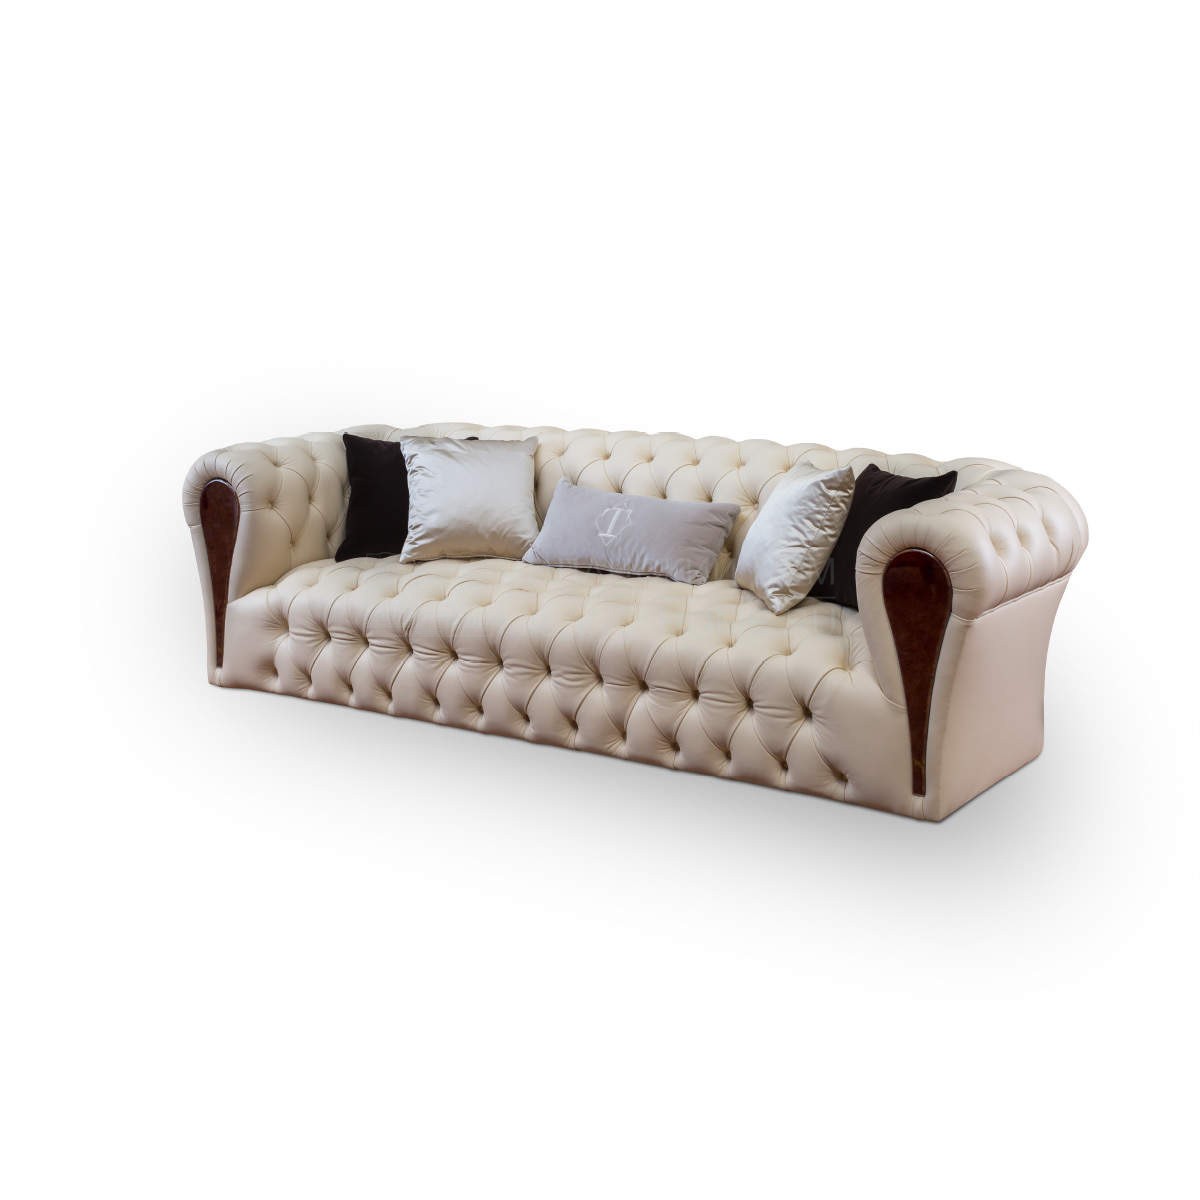 Прямой диван Mayfair sofa leather из Италии фабрики TURRI